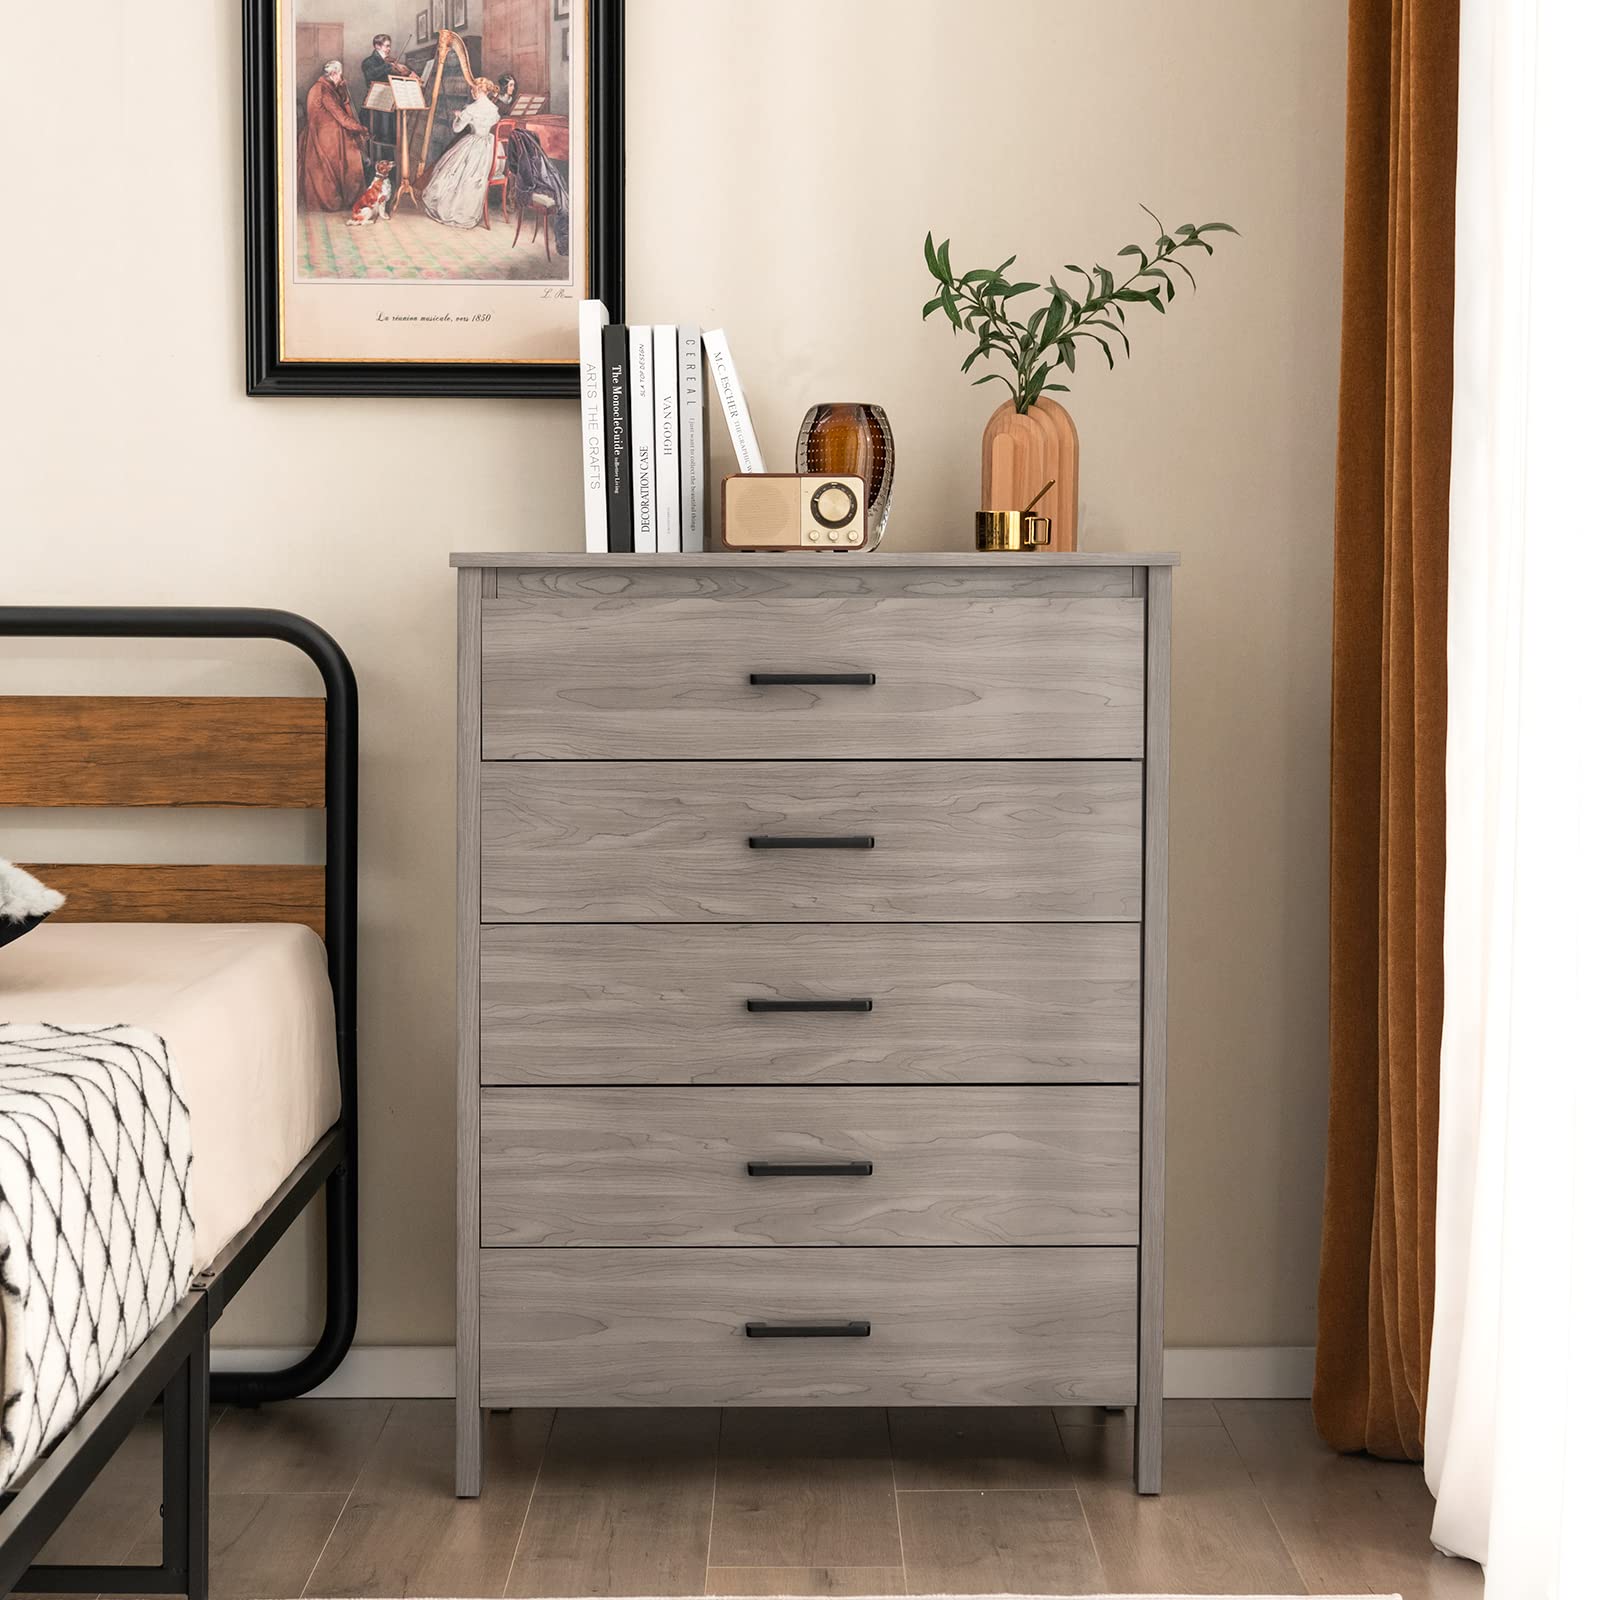 Giantex 5-Drawer Chest Dresser for Bedroom - 41.5" Multipurpose Storage Clothes Organizer